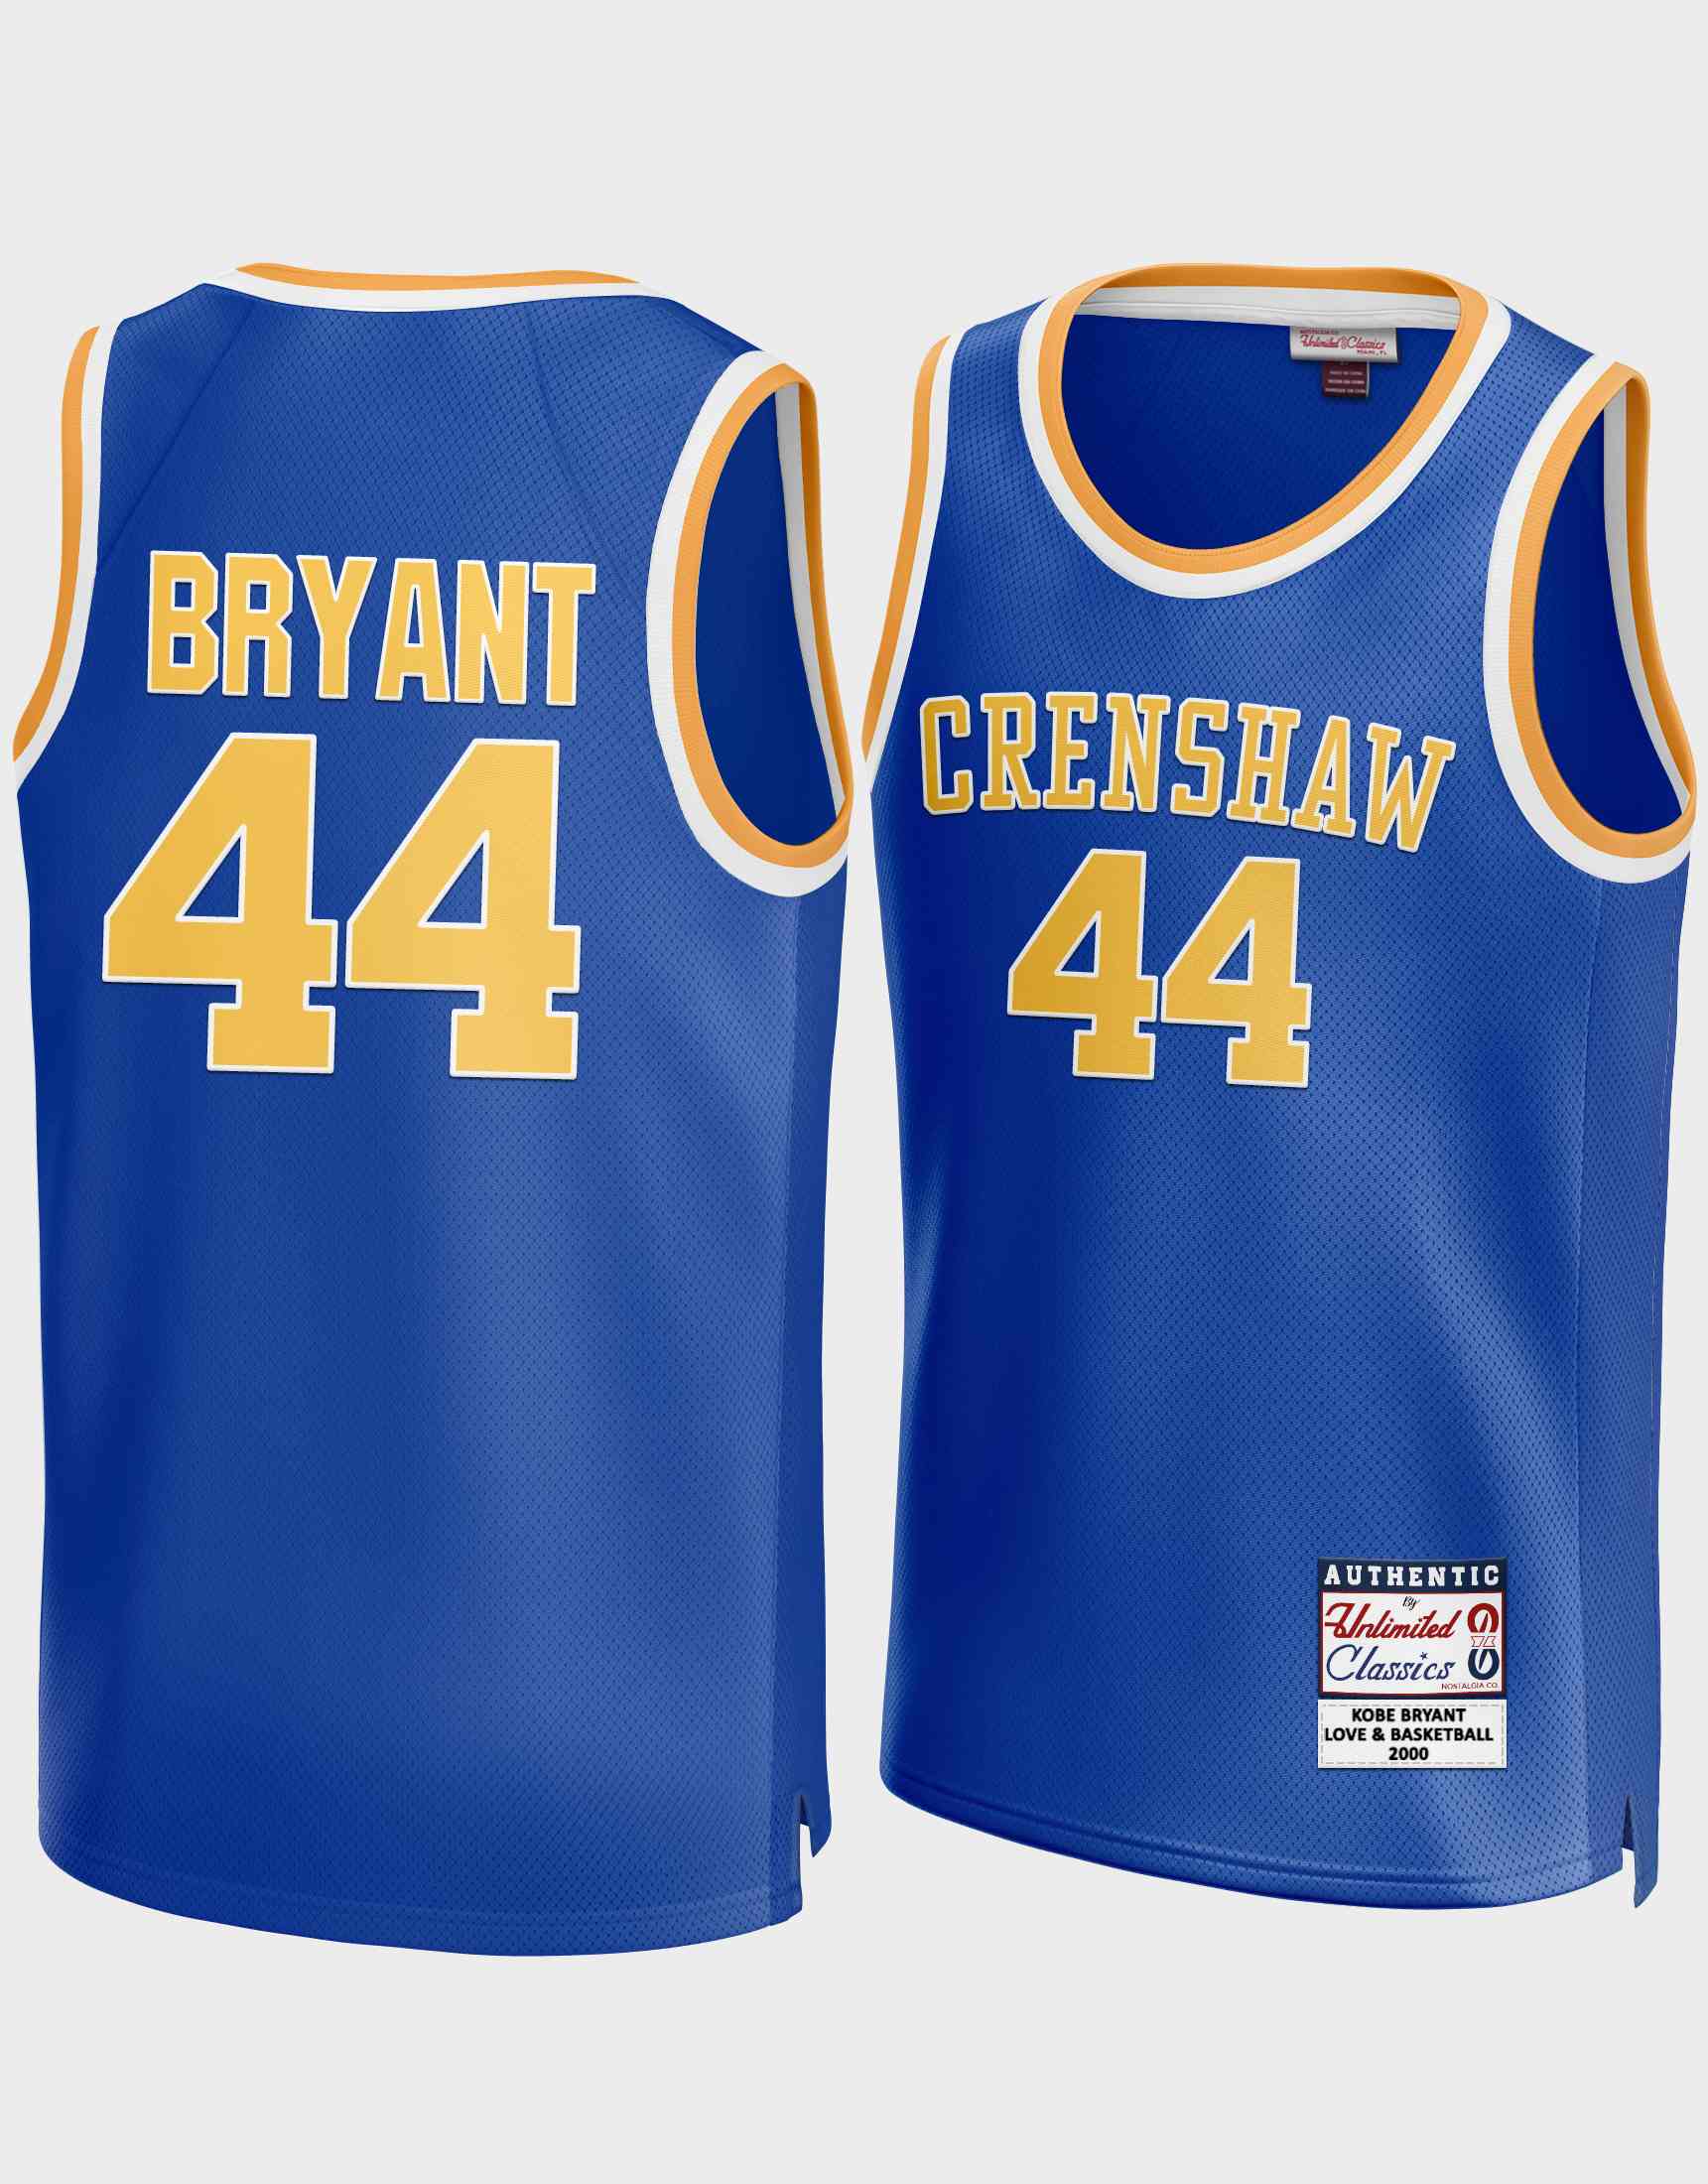 Kobe Bryant Crenshaw Basketball Jersey. Brand New! Size L